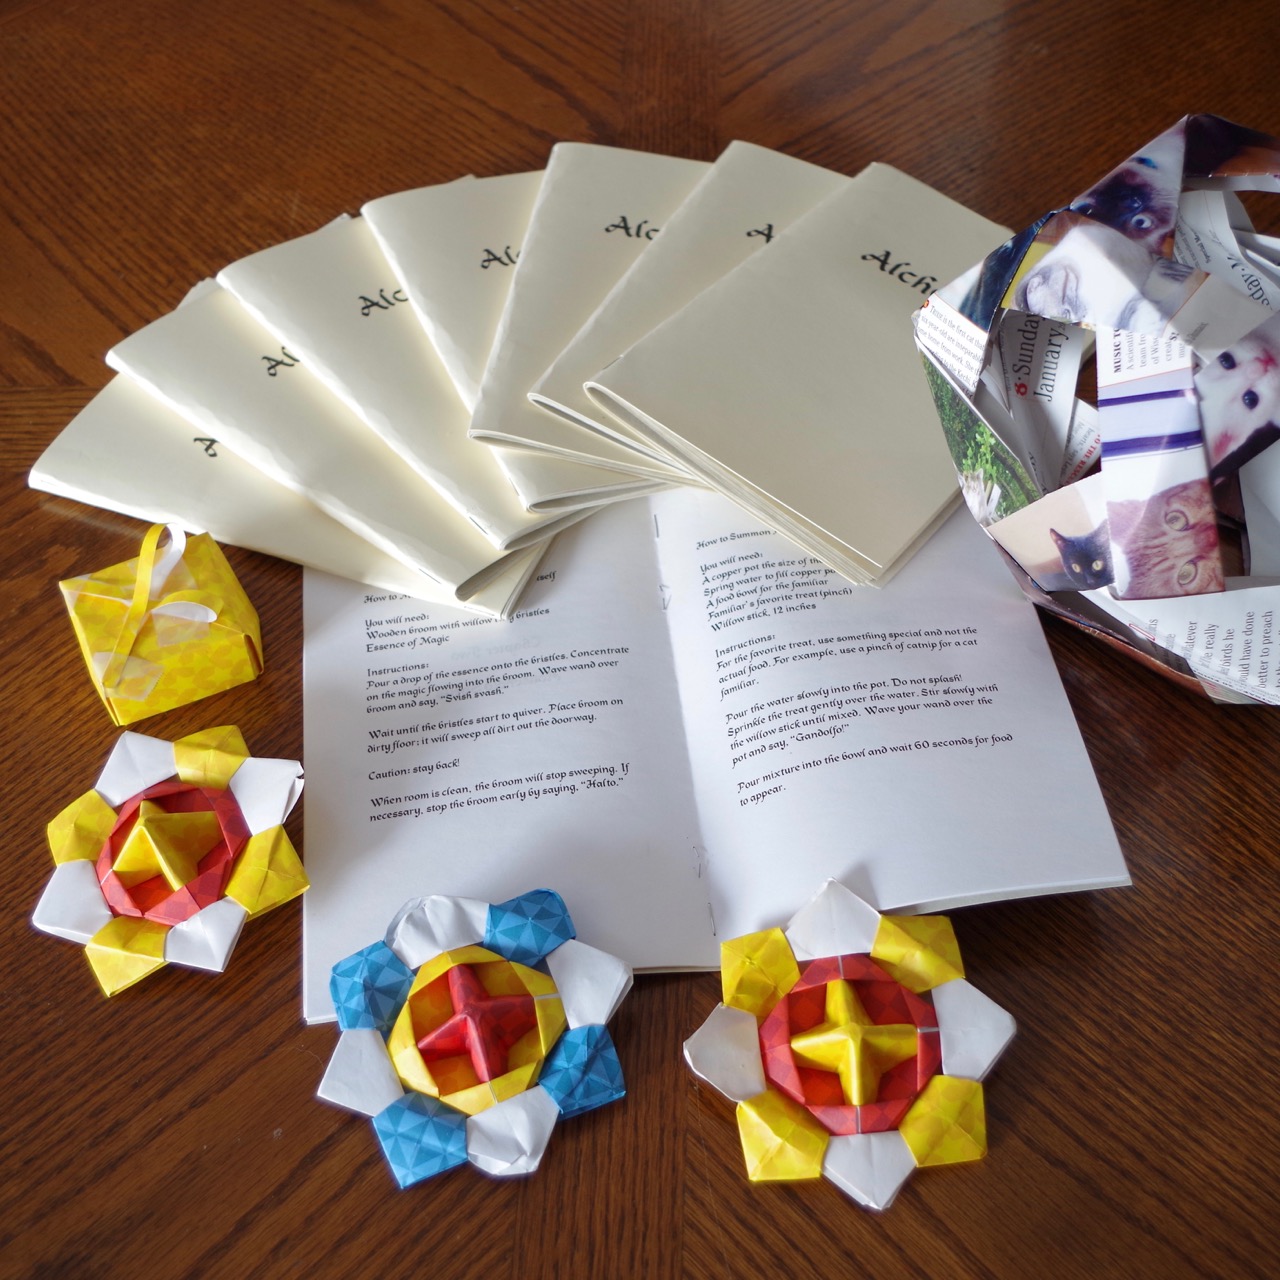 Benjamin's Origami Creations and Spellbook